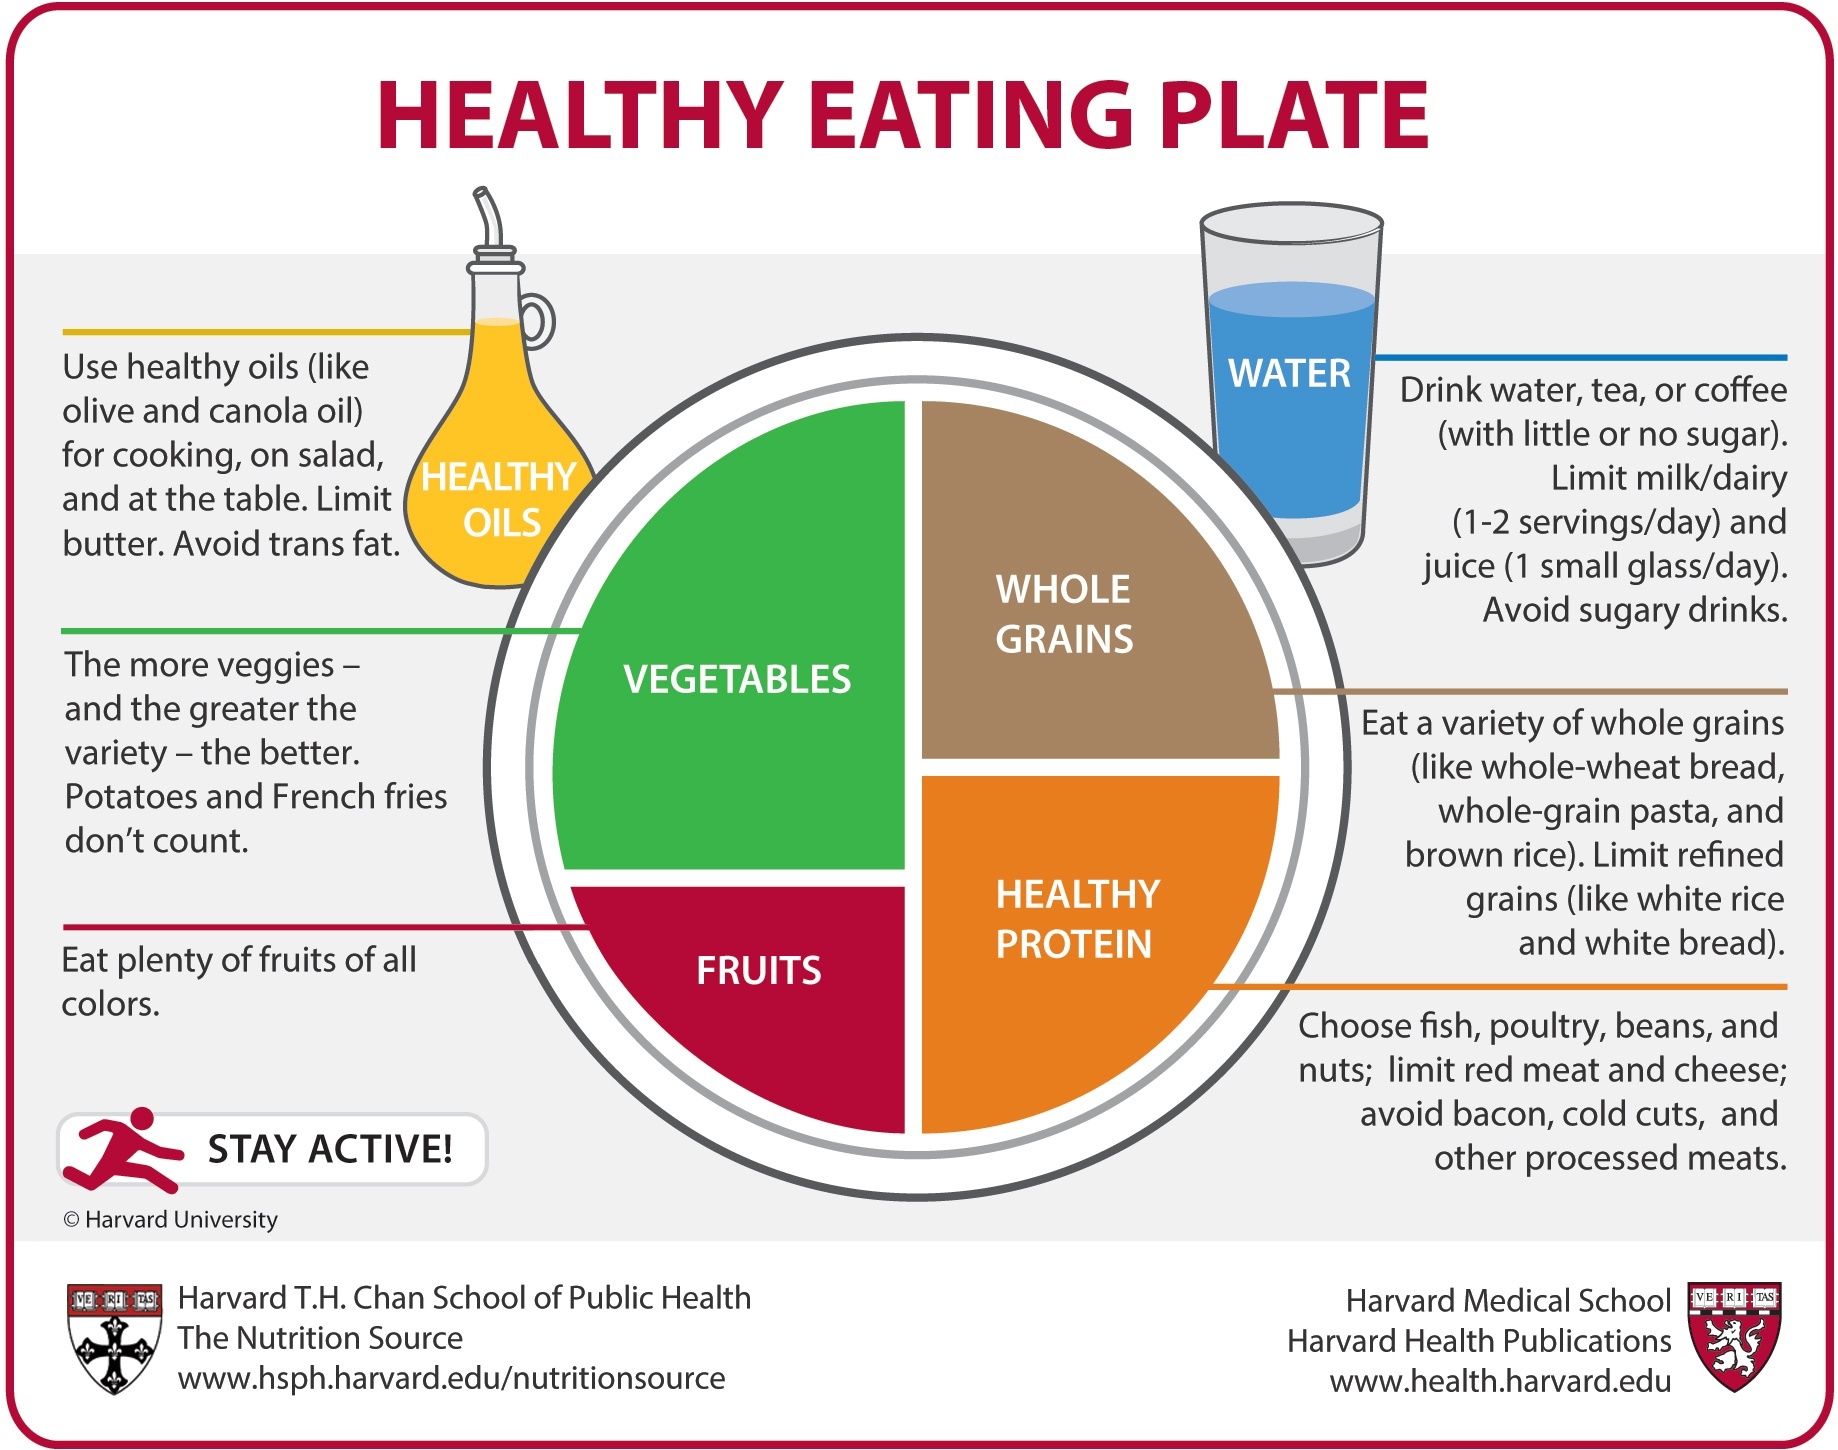 Why We Love Harvard's Healthy Eating Plate